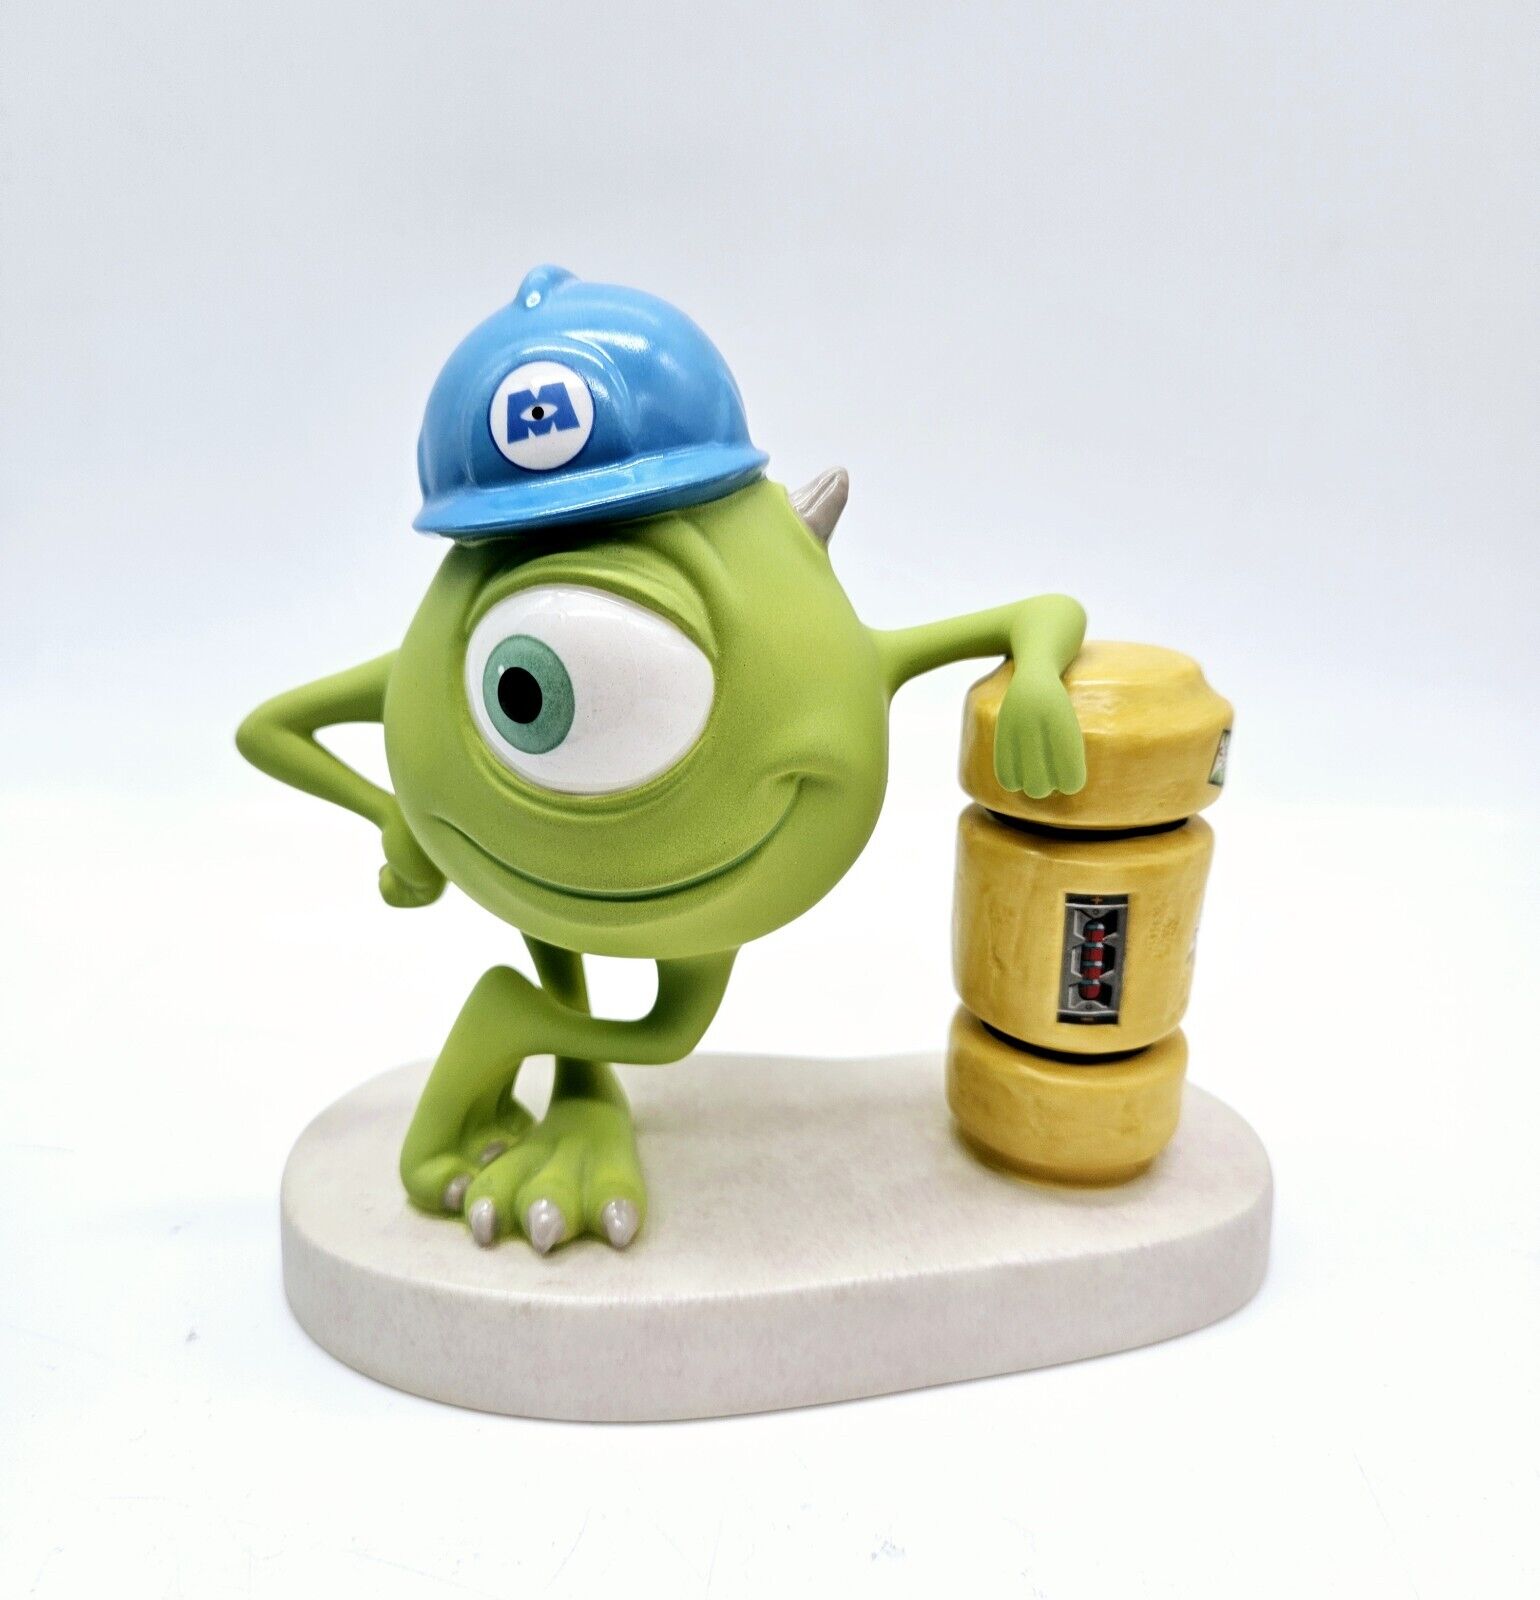 WDCC Disney Pixar Monsters Inc Figurine Mike Wazowski It's Been Fun